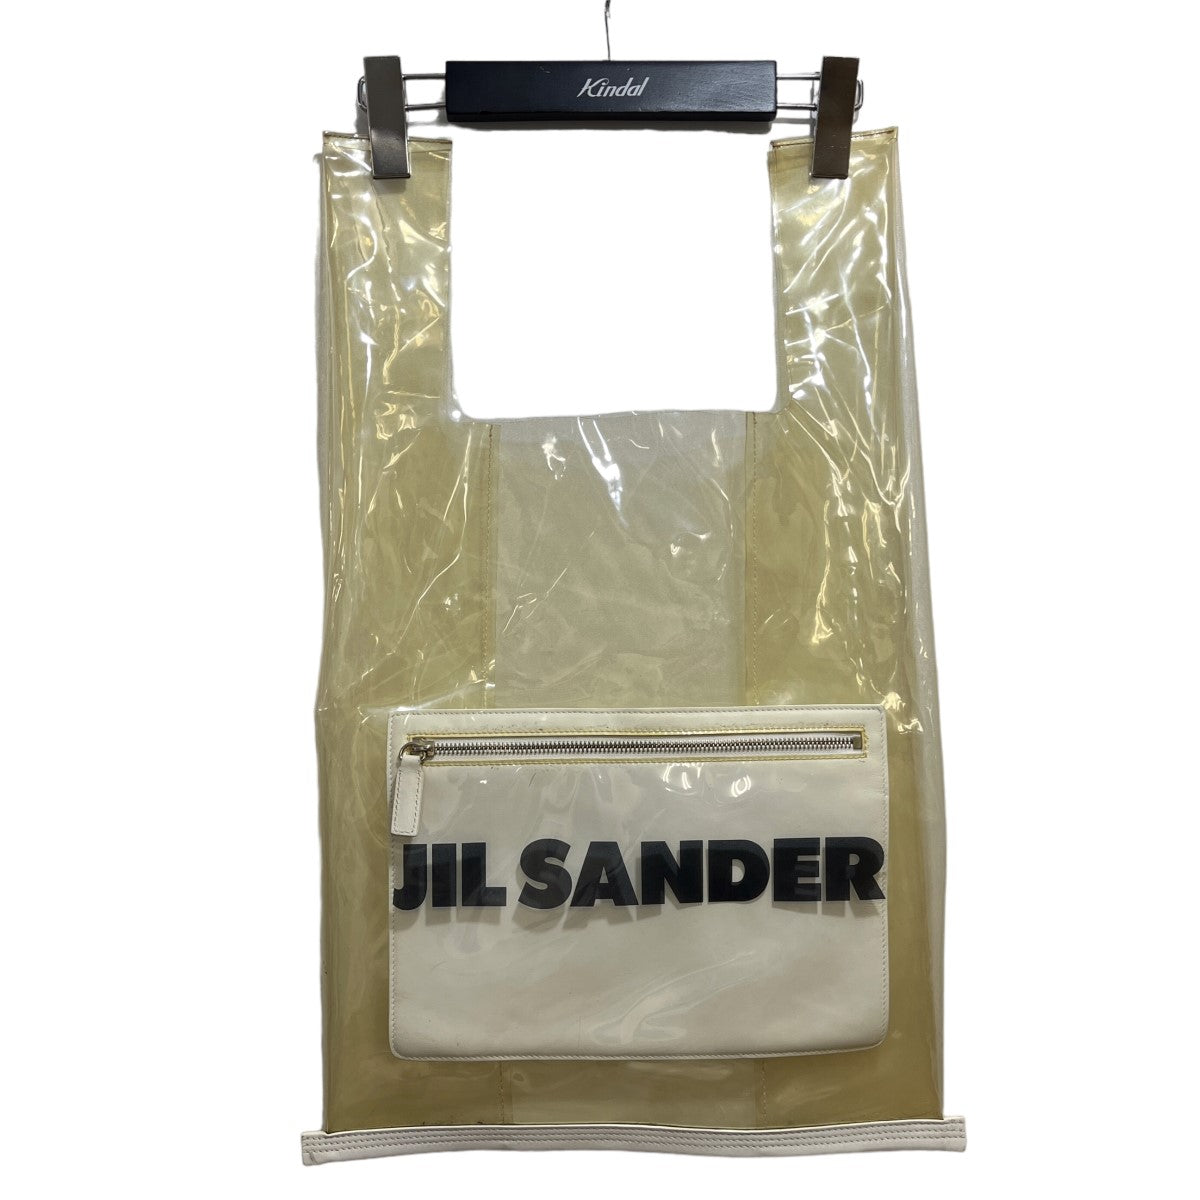 JIL SANDER(ジルサンダー) PVCバッグ クリア サイズ 13｜【公式】カインドオルオンライン ブランド古着・中古通販【kindal】